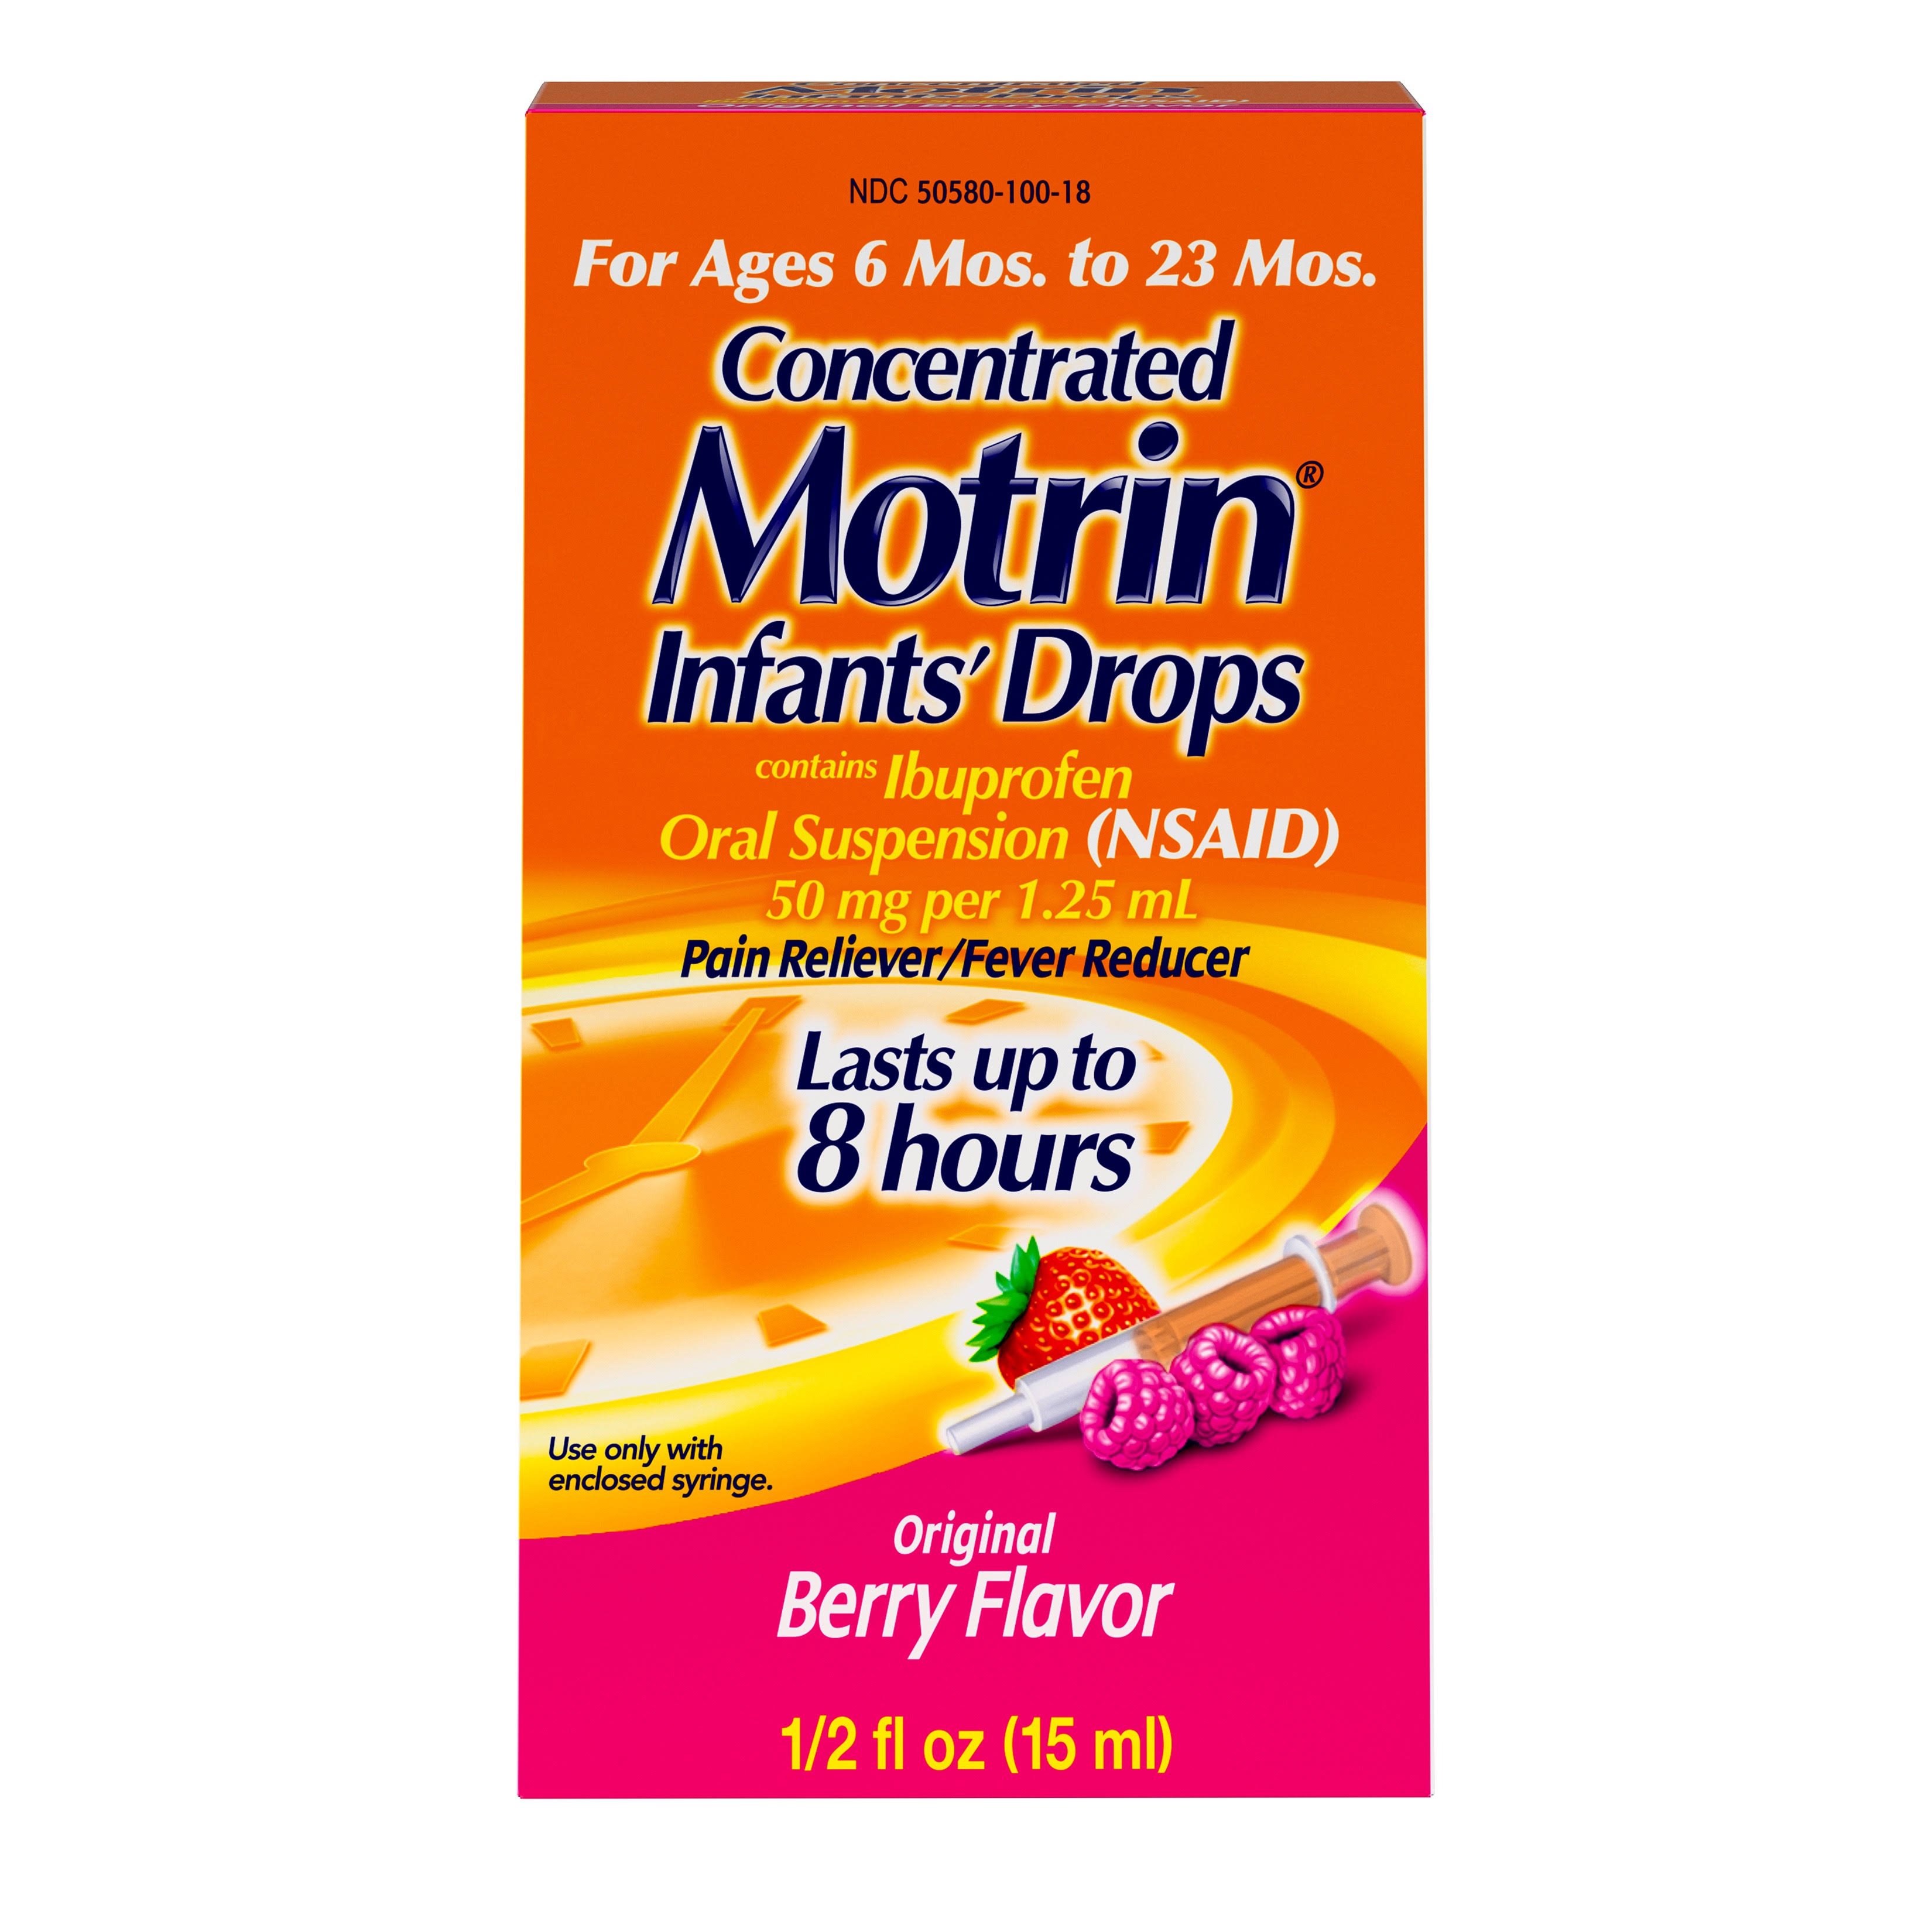 Motrin Infants' Drops, Concentrated, Original Berry Flavor - 0.5 fl oz